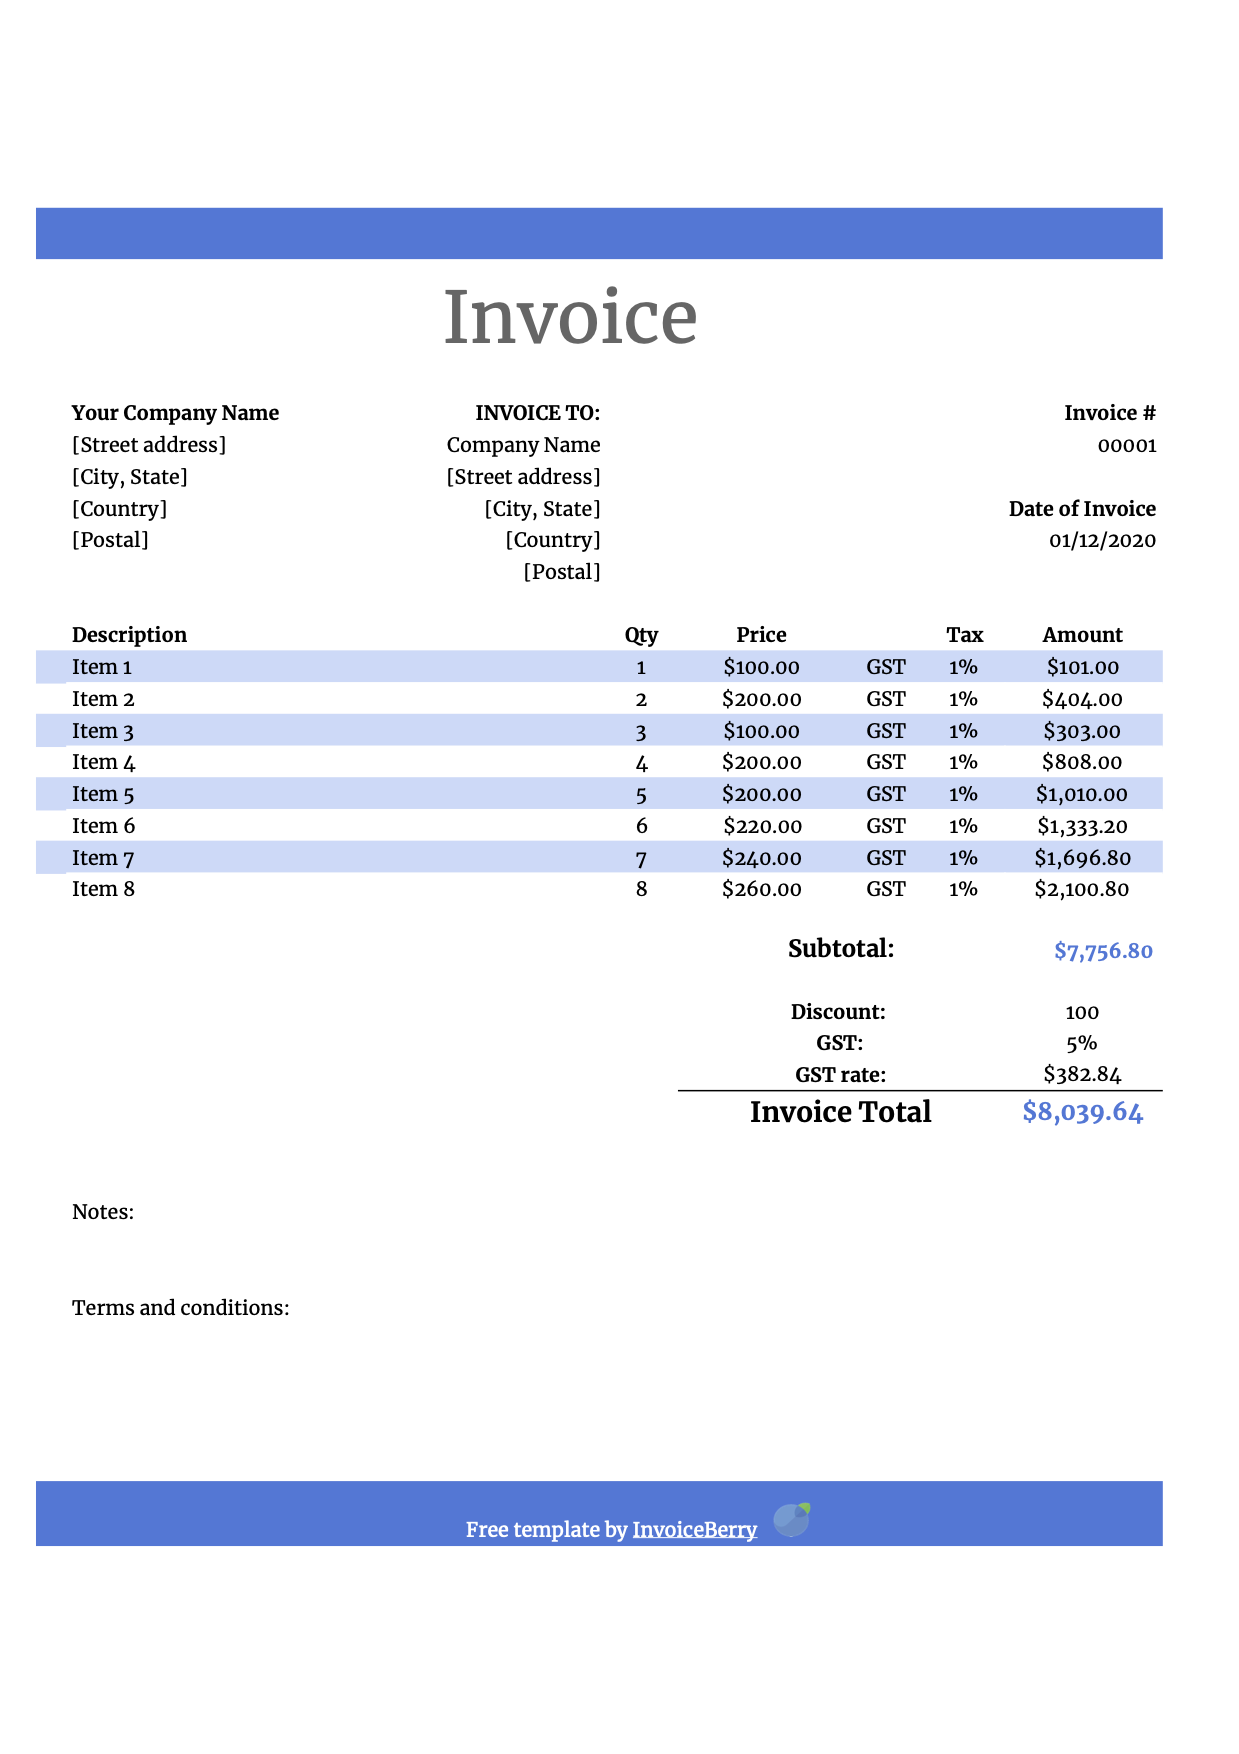 free google drive invoice templates blank docs sheets invoices invoiceberry